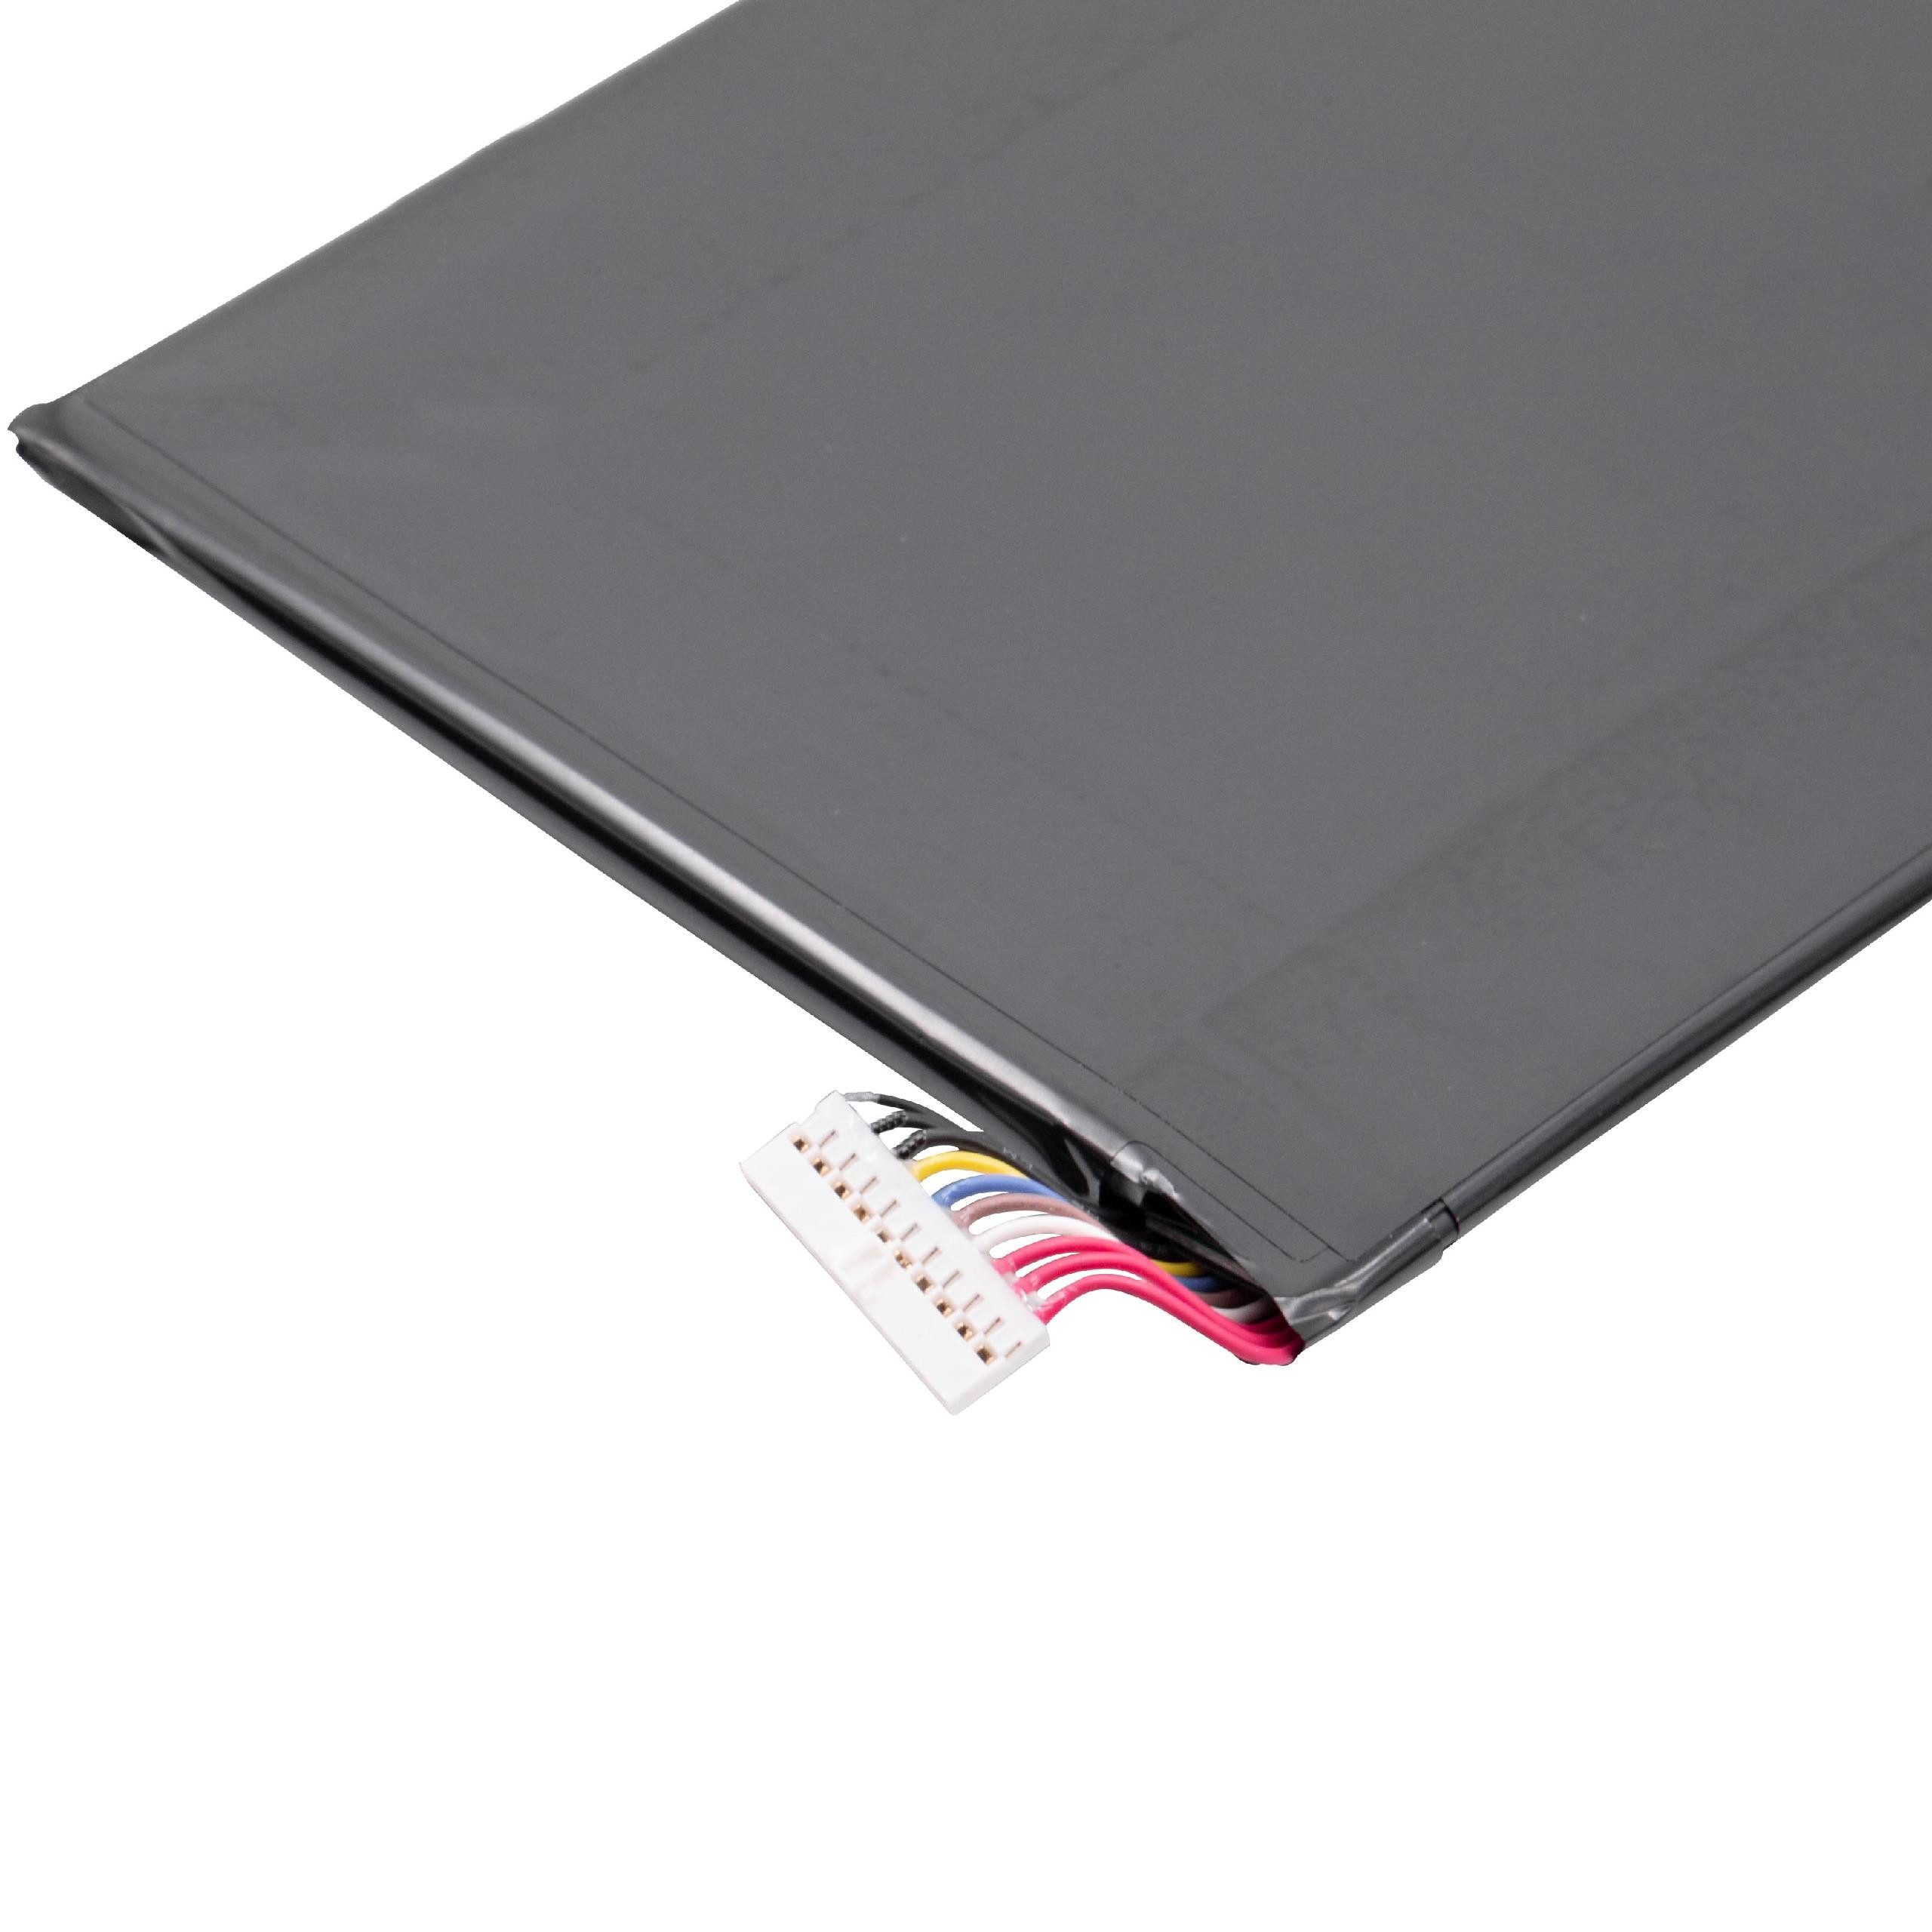 Laptop-Akku GS73VR 5700 MSI Notebook / passend 7RG-035CN vhbw GS73VR 7RF-284CN, für mAh Notebook